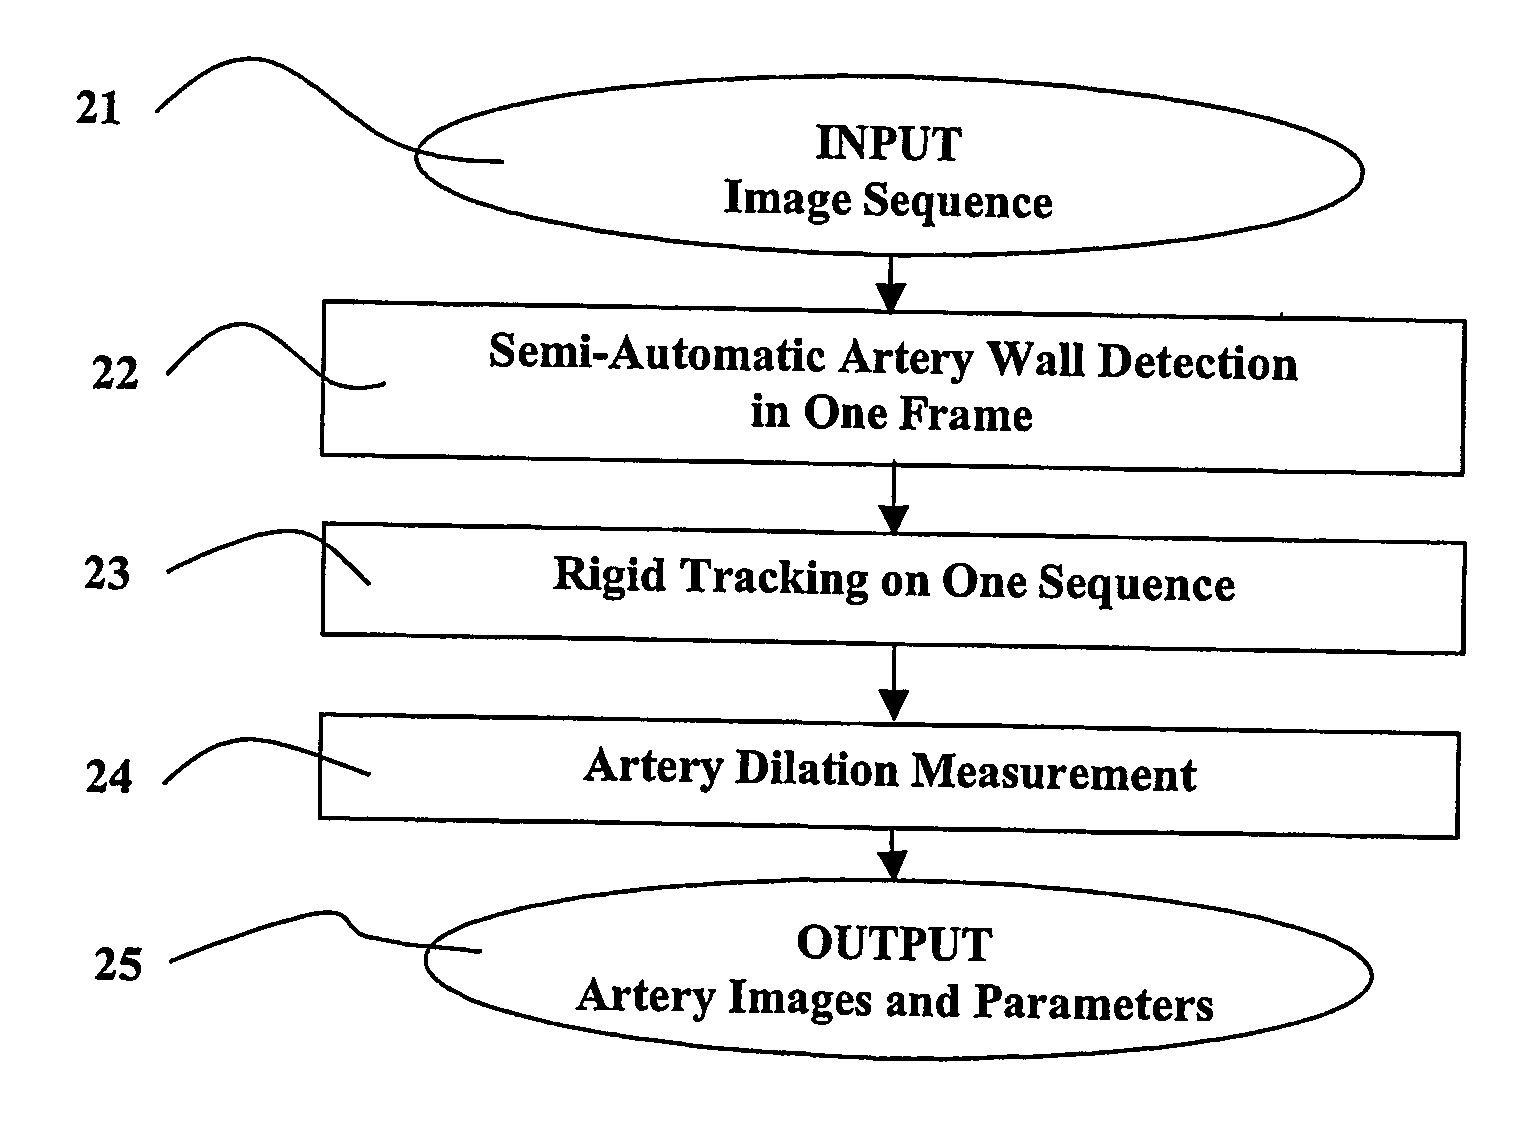 Ultrasonic apparatus for estimating artery parameters